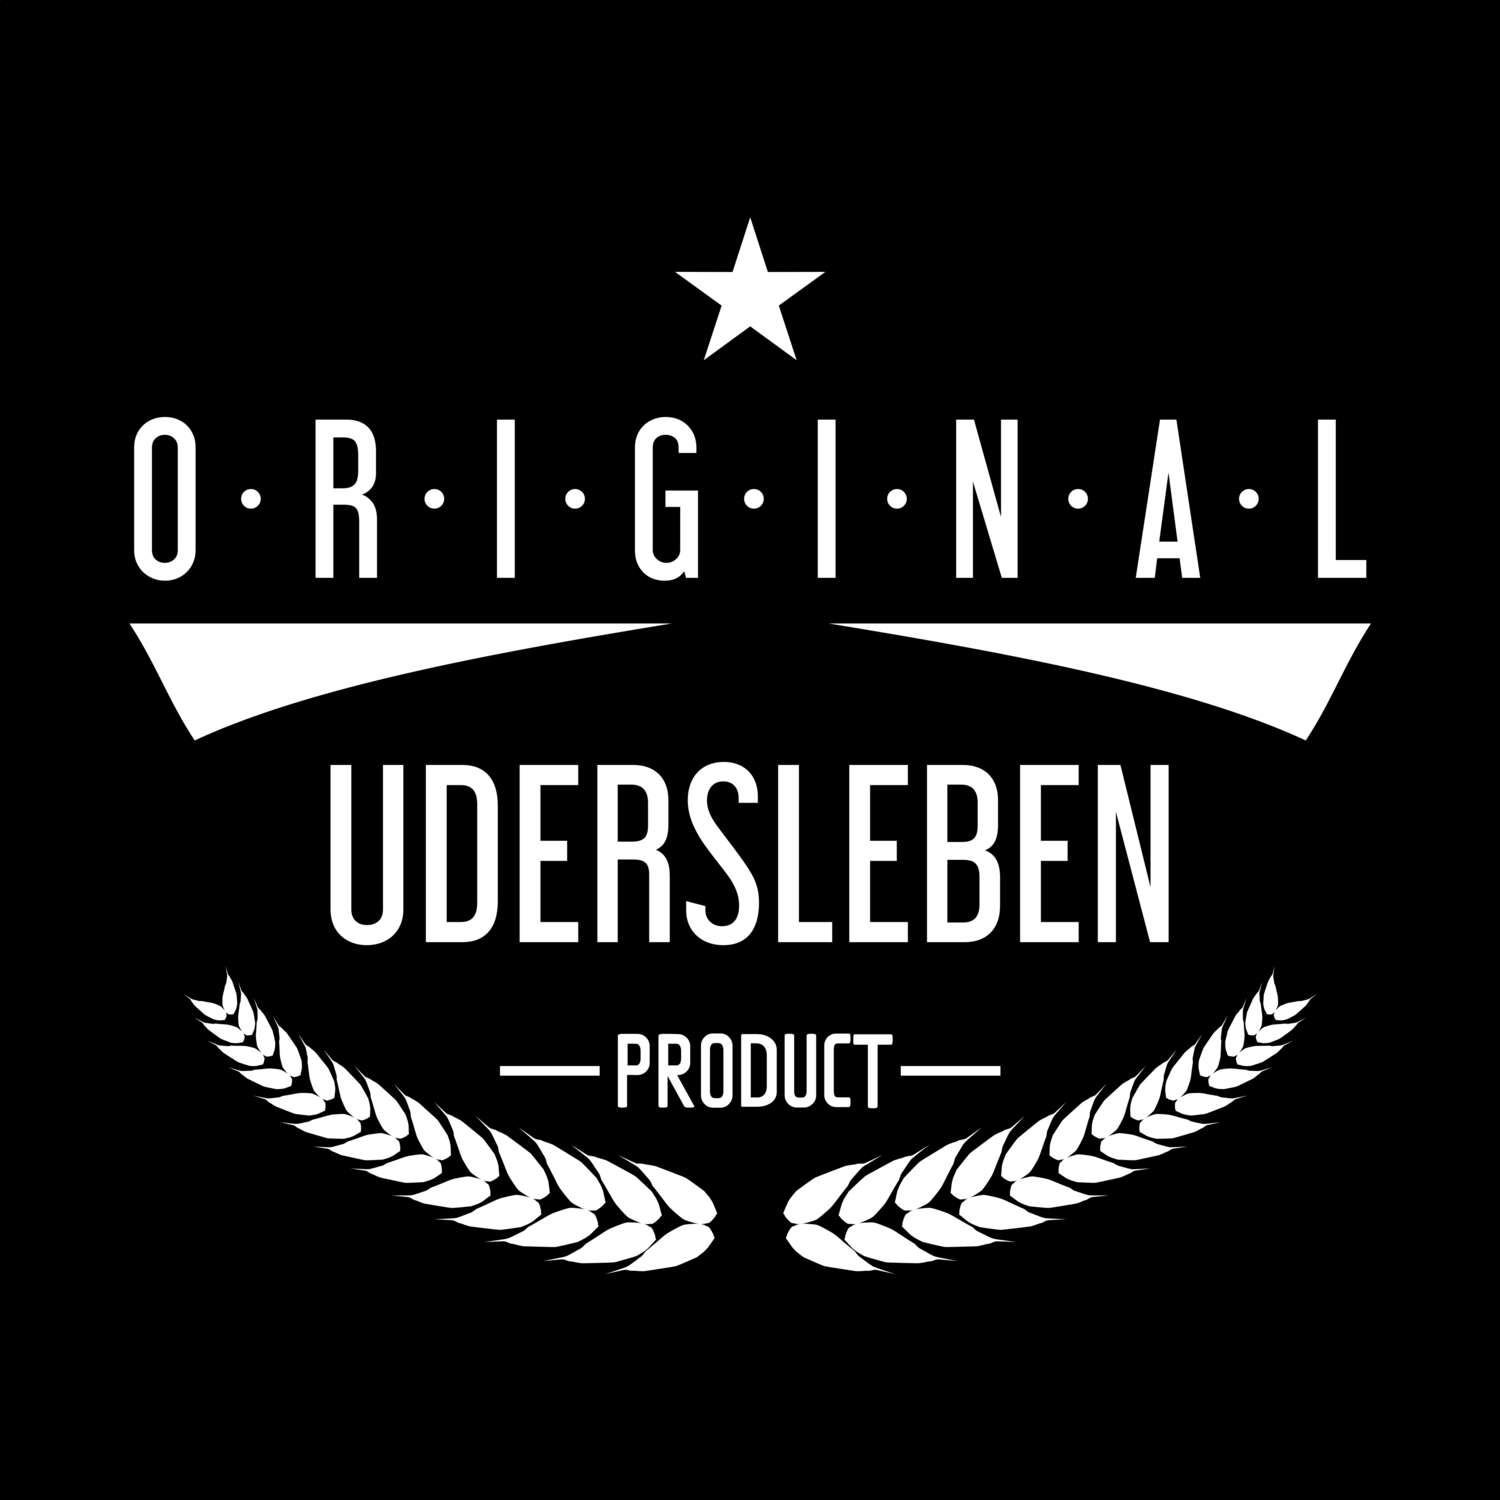 Udersleben T-Shirt »Original Product«